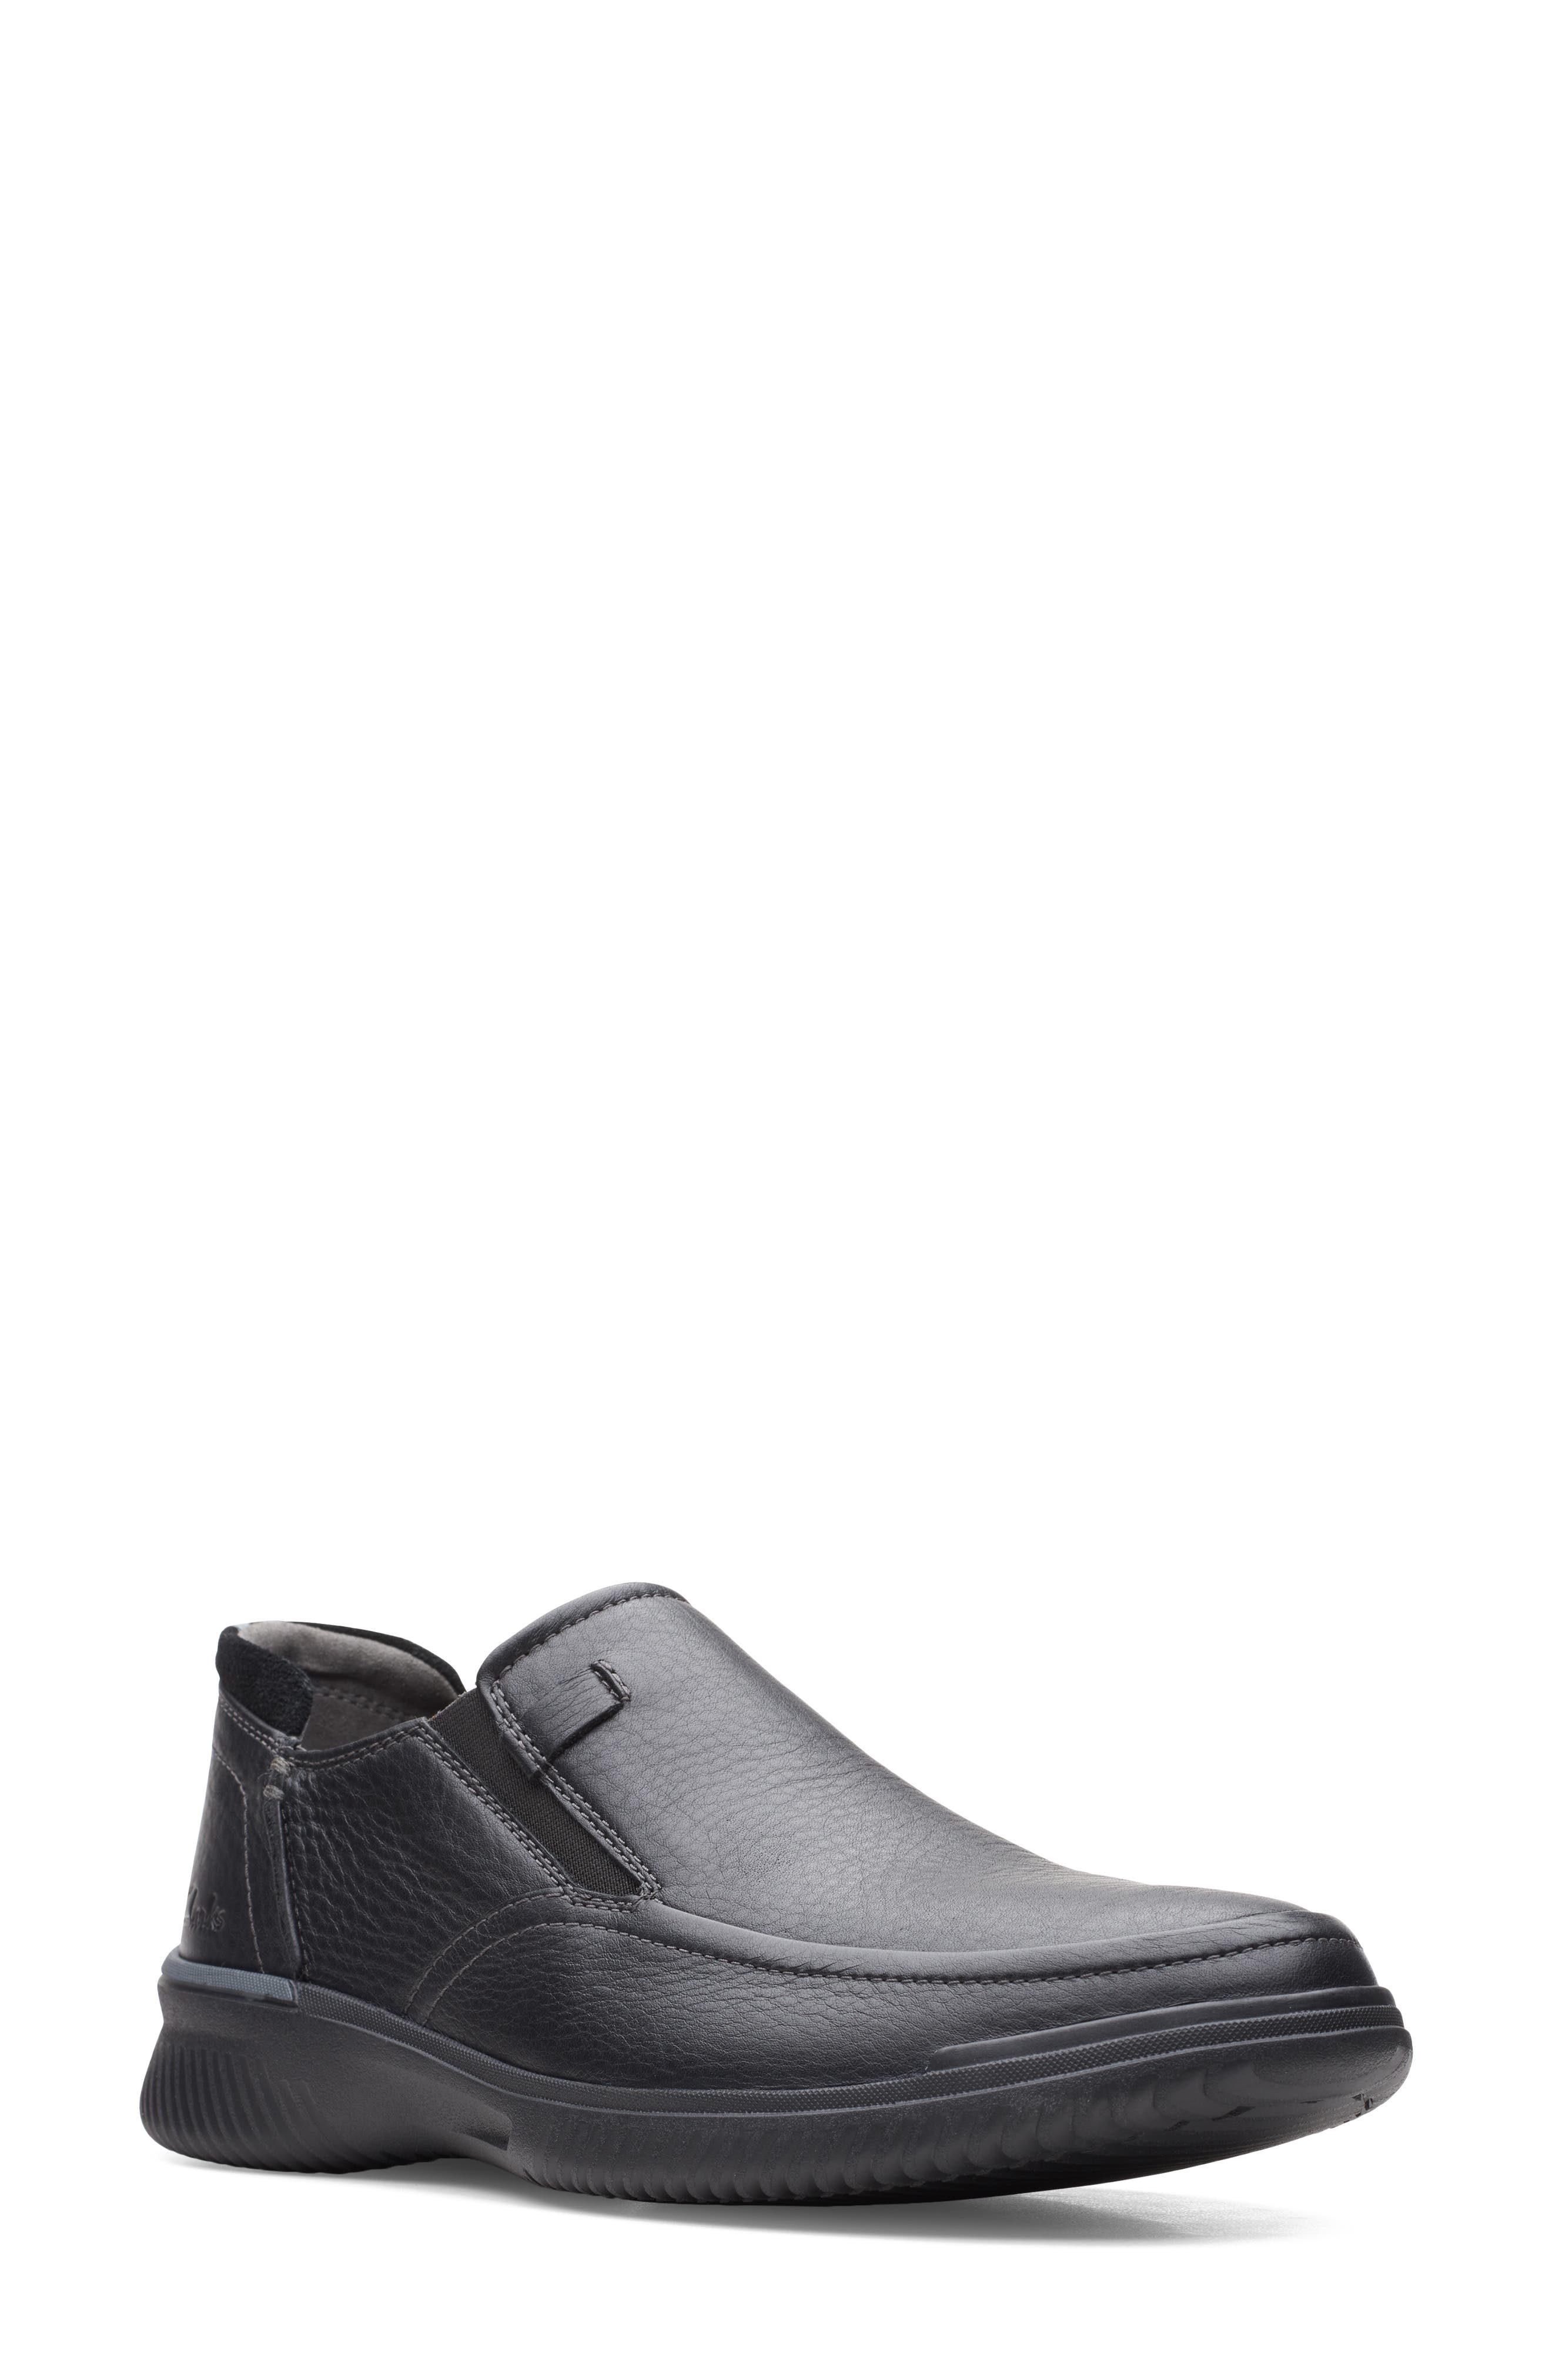 Clarks CUSHOX STEP Mens Black Leather 27818 Slip On Comfort Shoes 